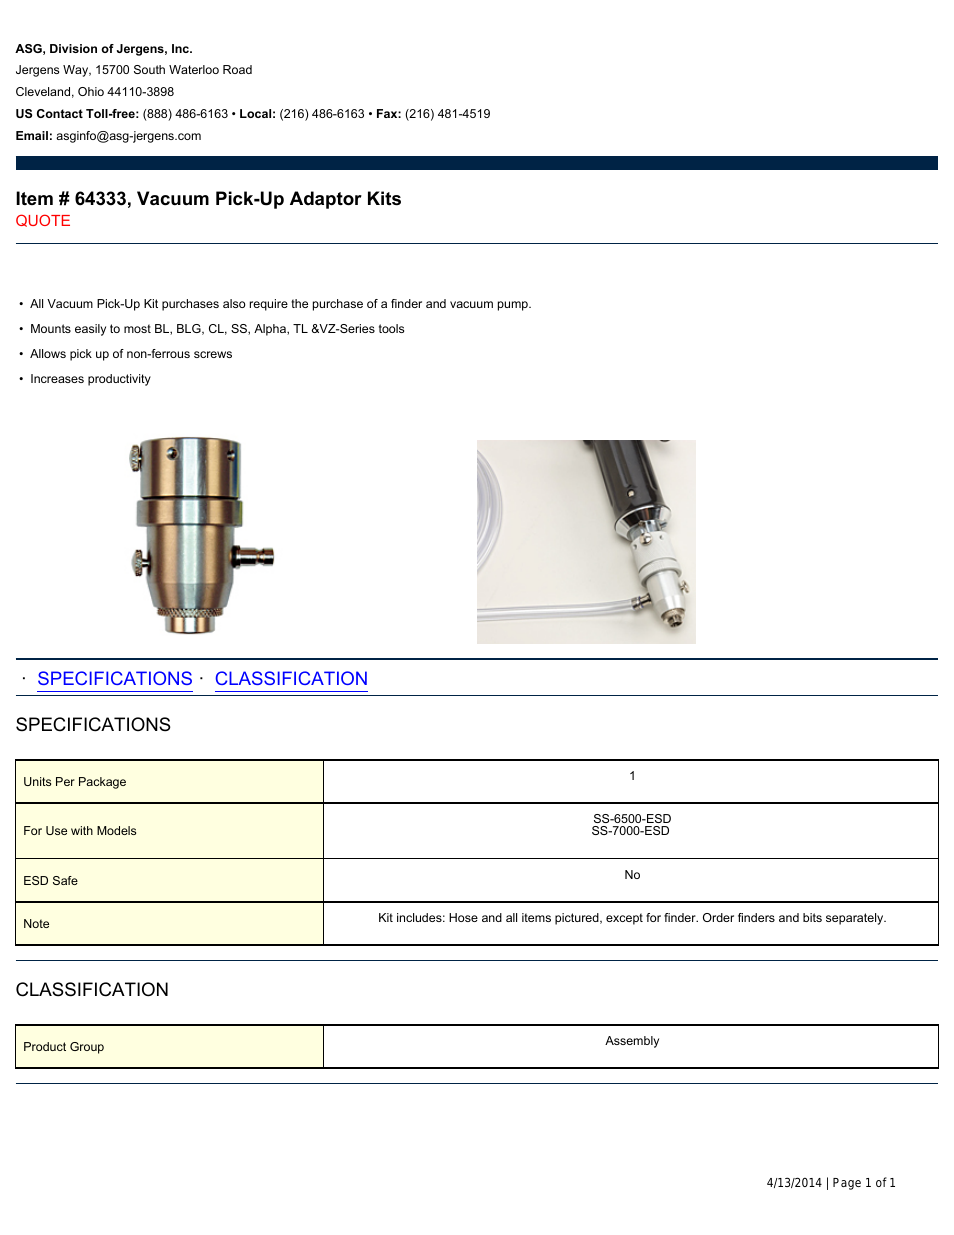 64333 Vacuum Pick-Up Adaptor Kits